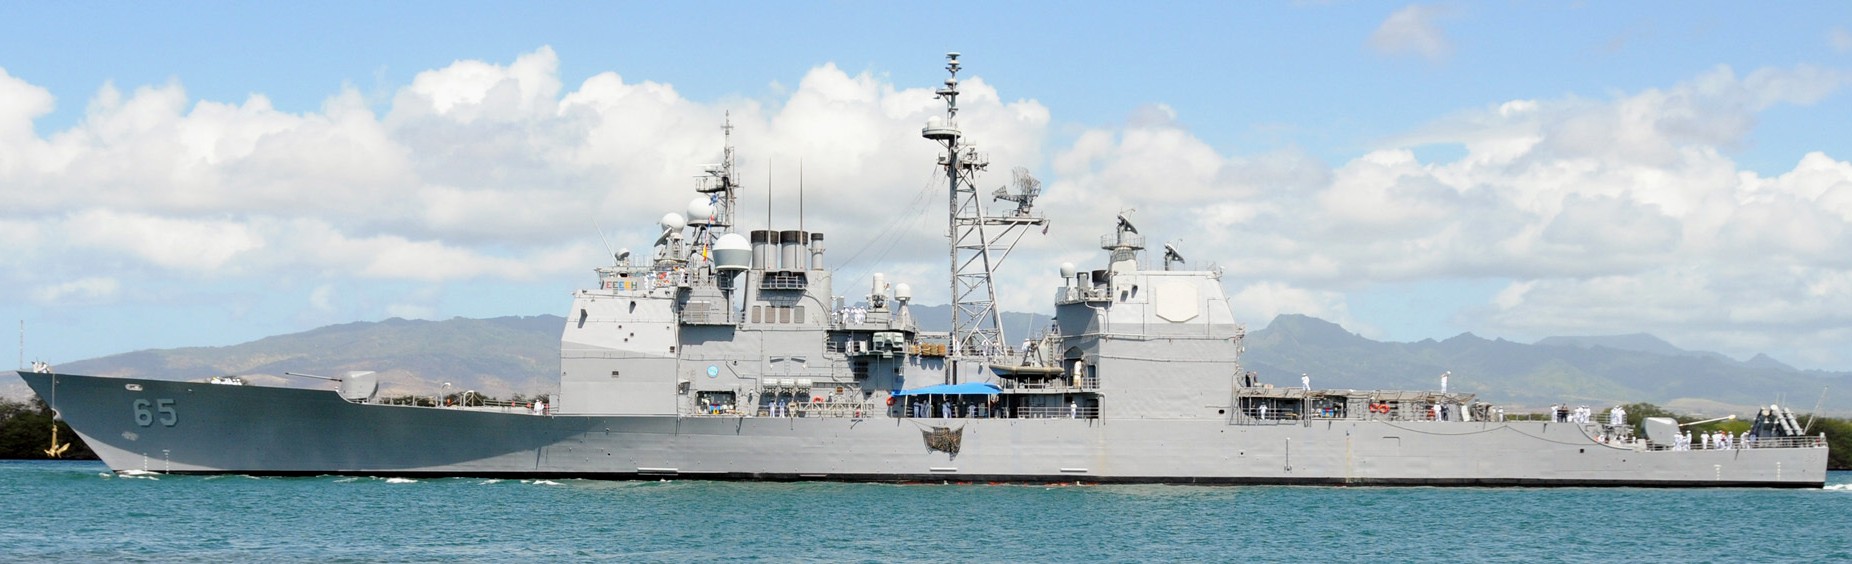 cg-65 uss chosin ticonderoga class guided missile cruiser aegis us navy 16